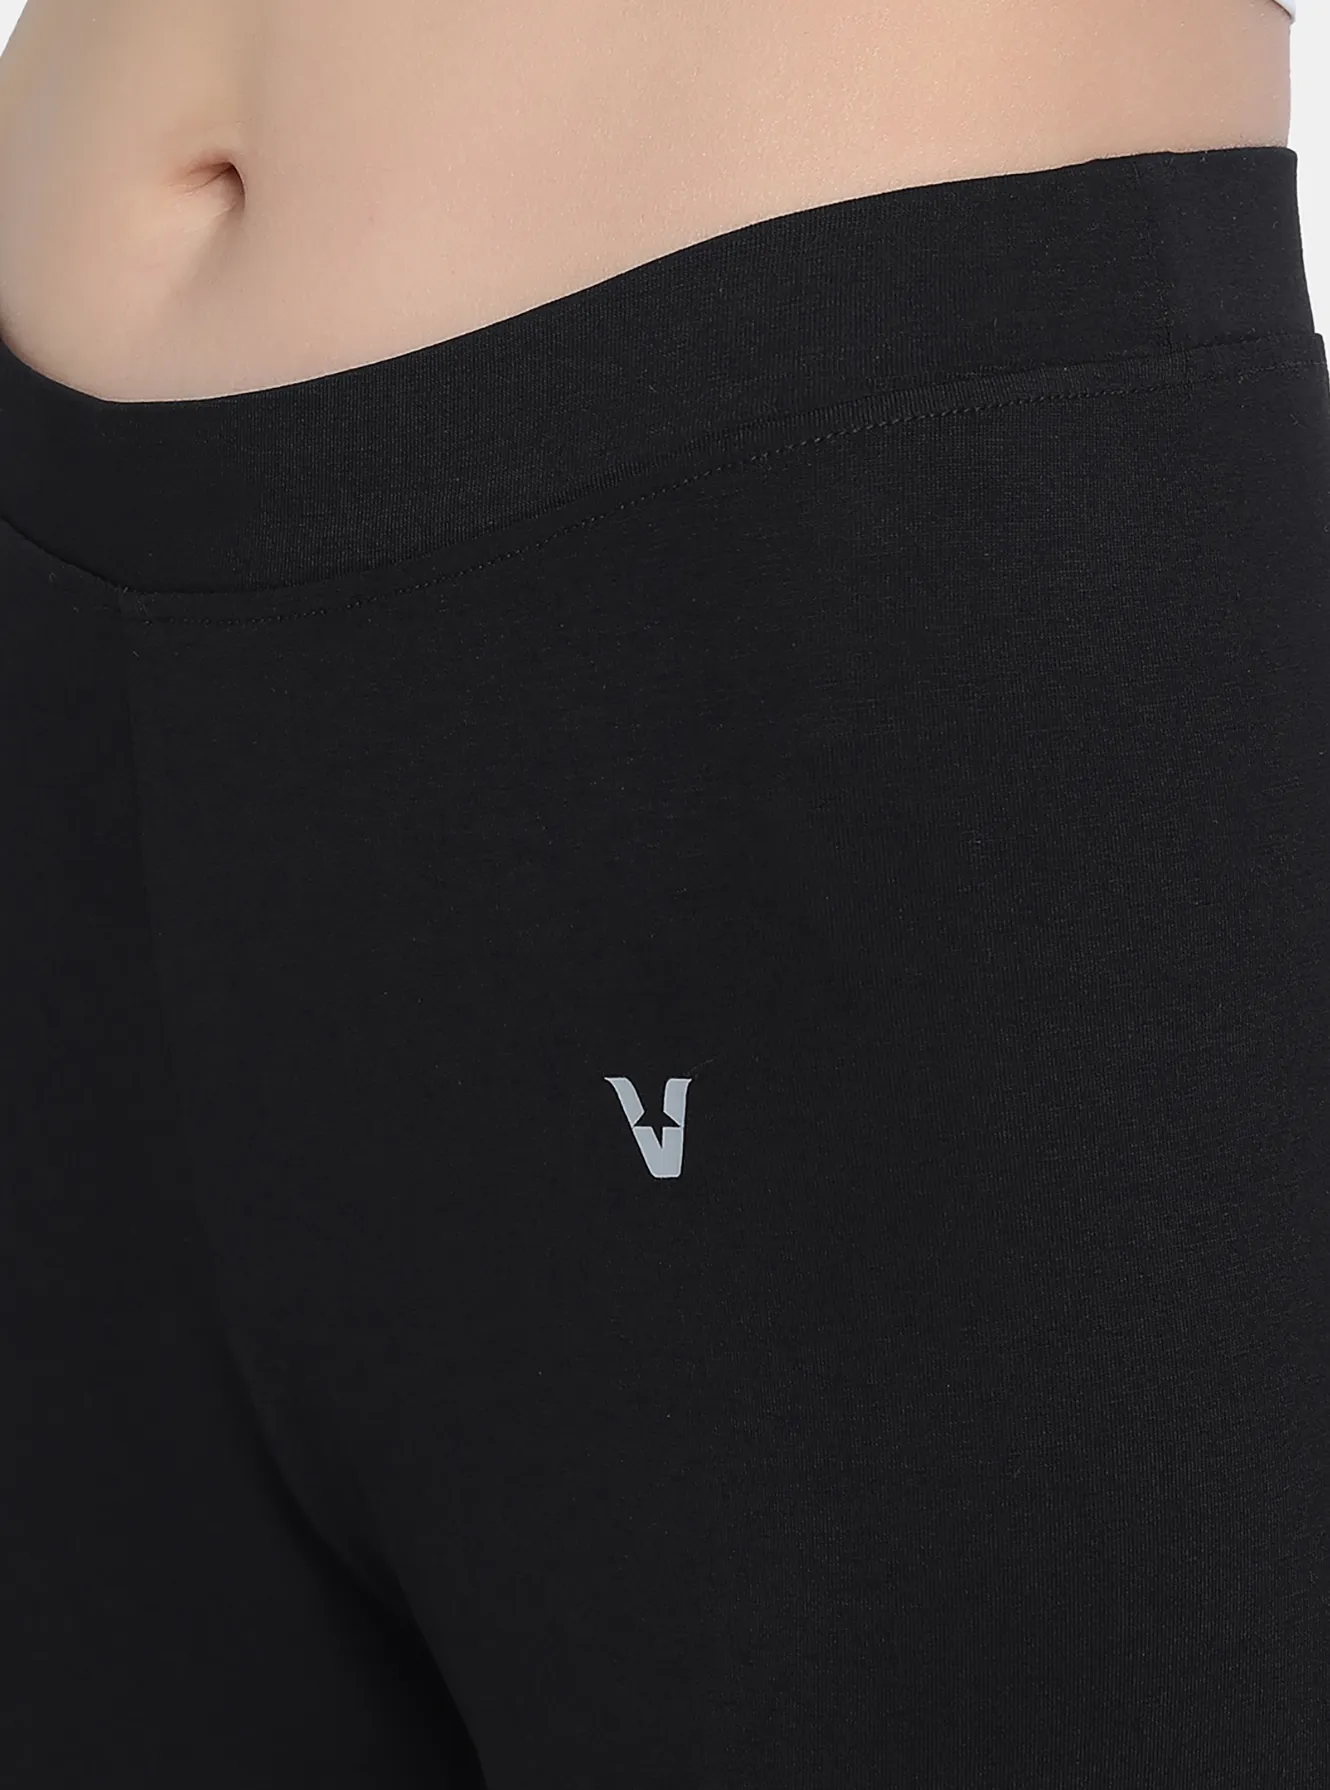 Buy Women Polyester Straight-Cut Gym Pants - Black Online | Decathlon